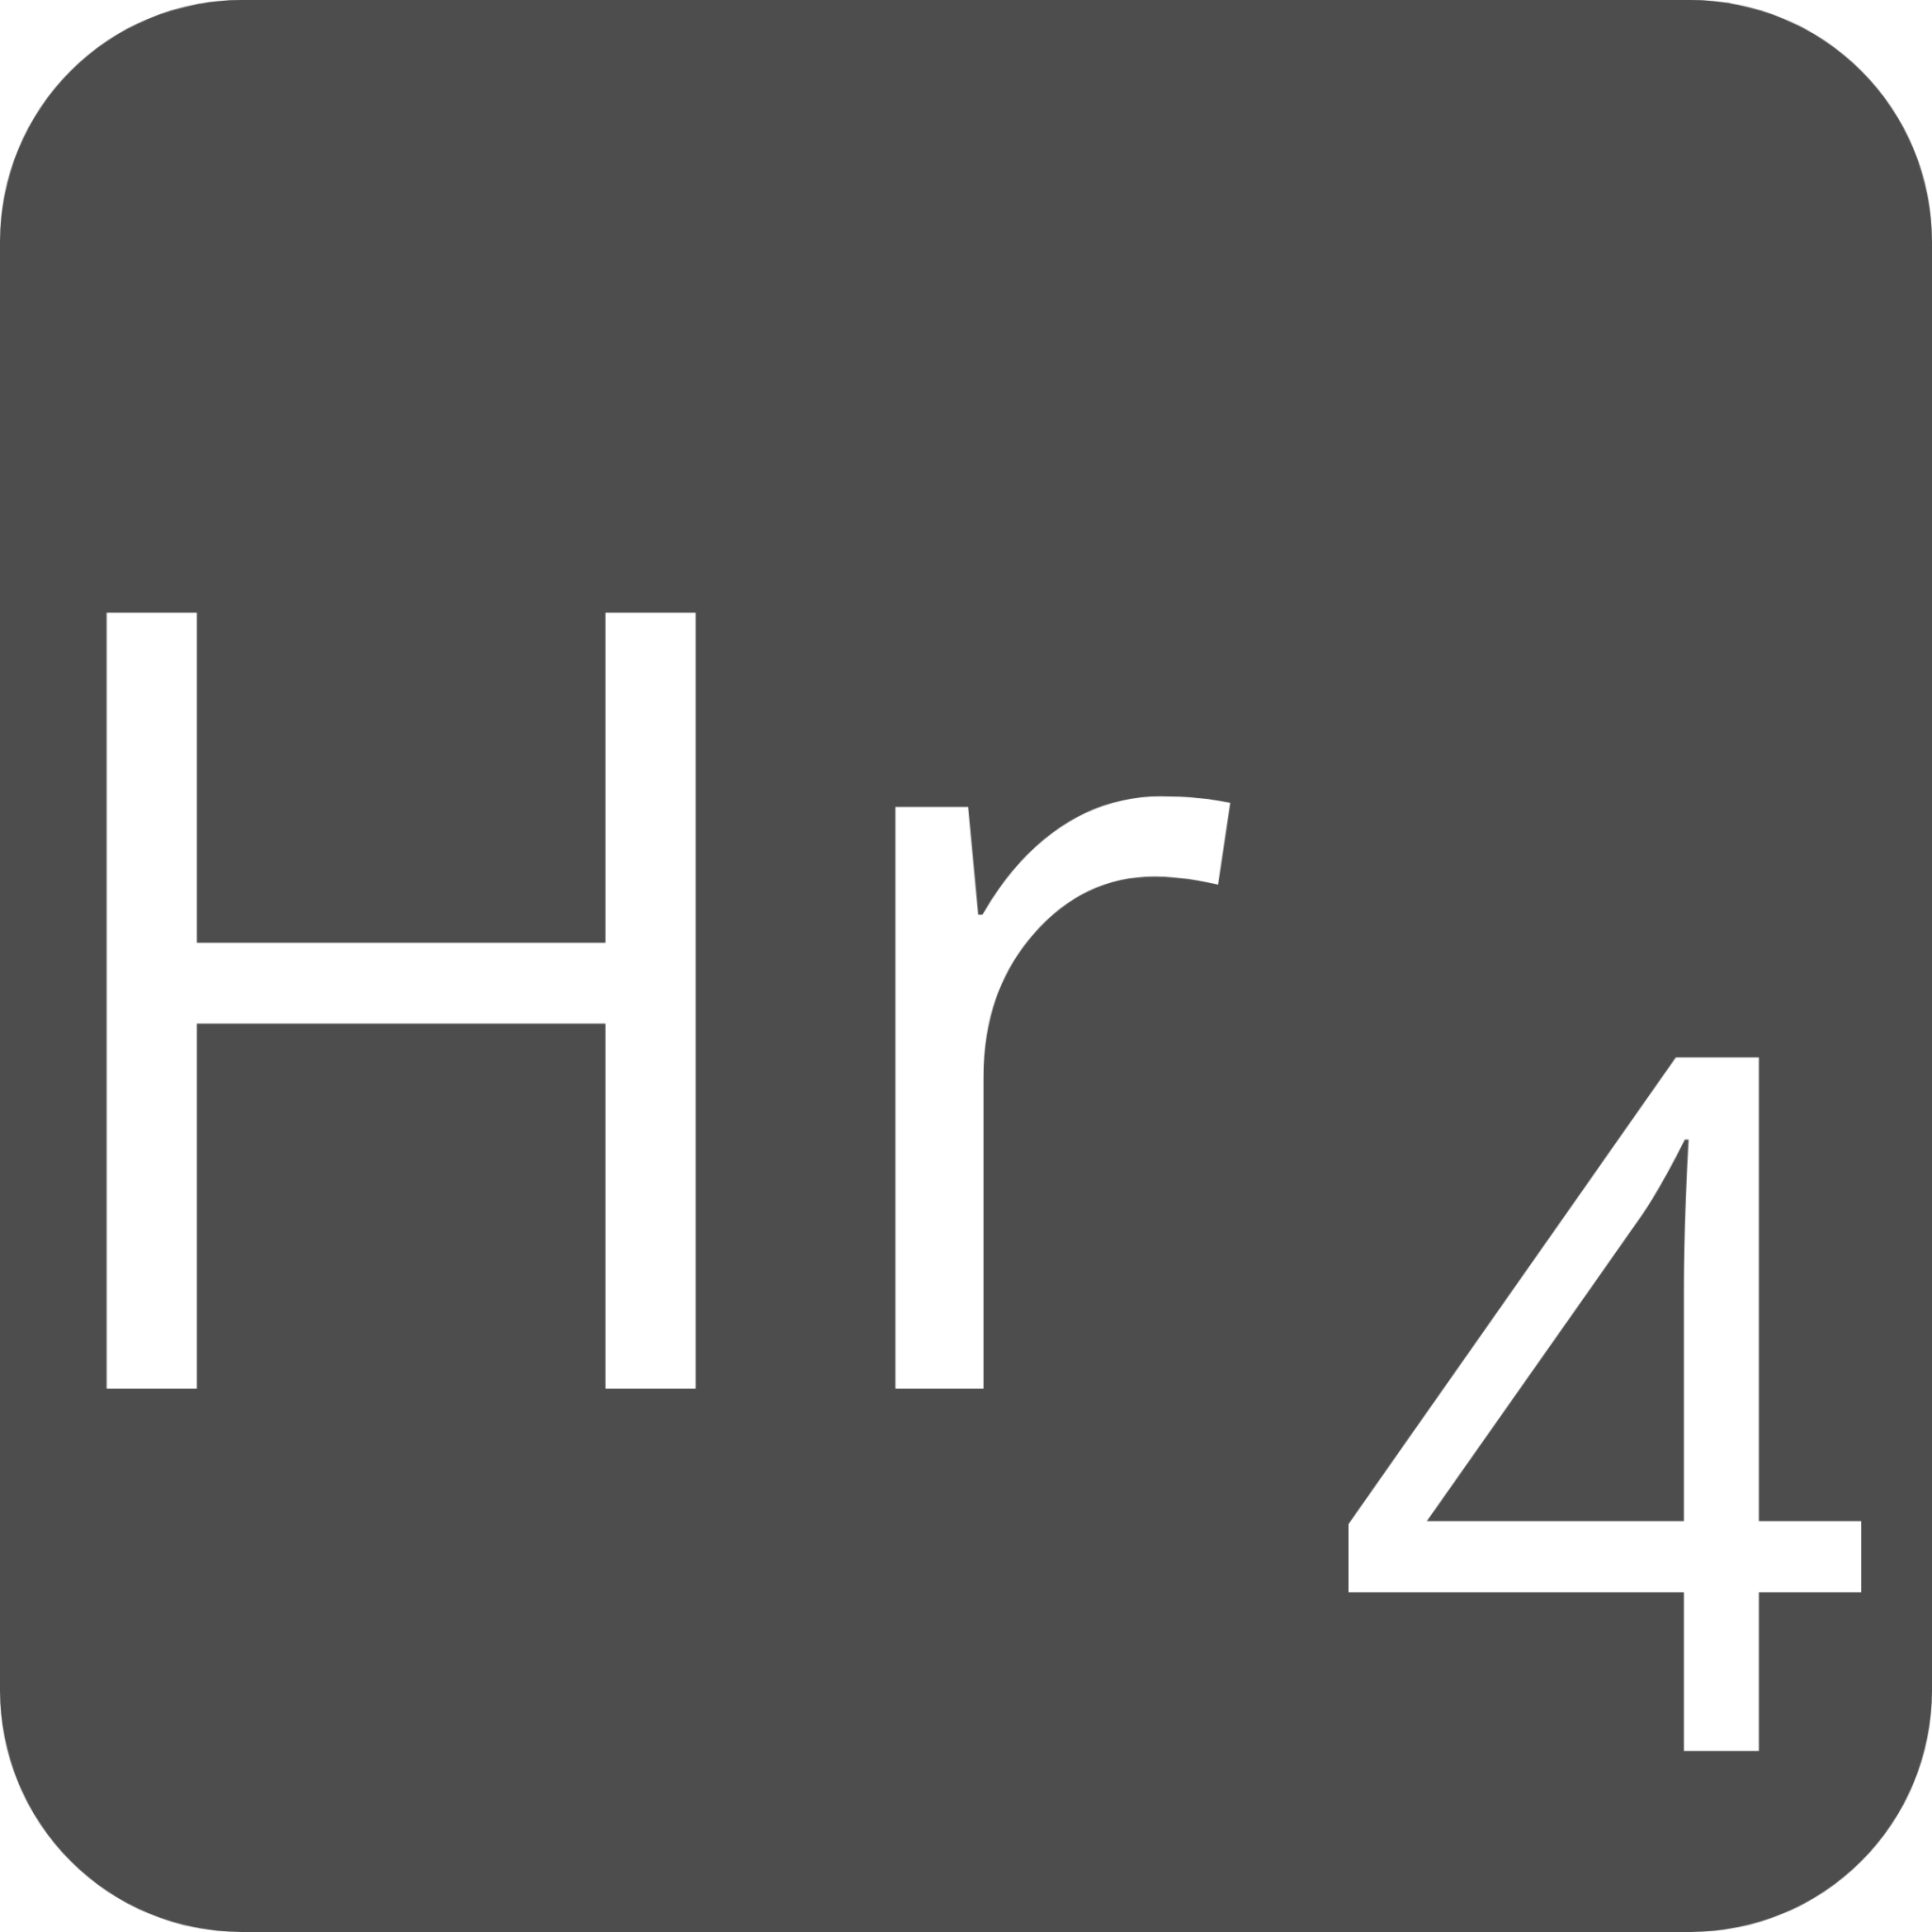 indicator keyboard Hr 4 icon